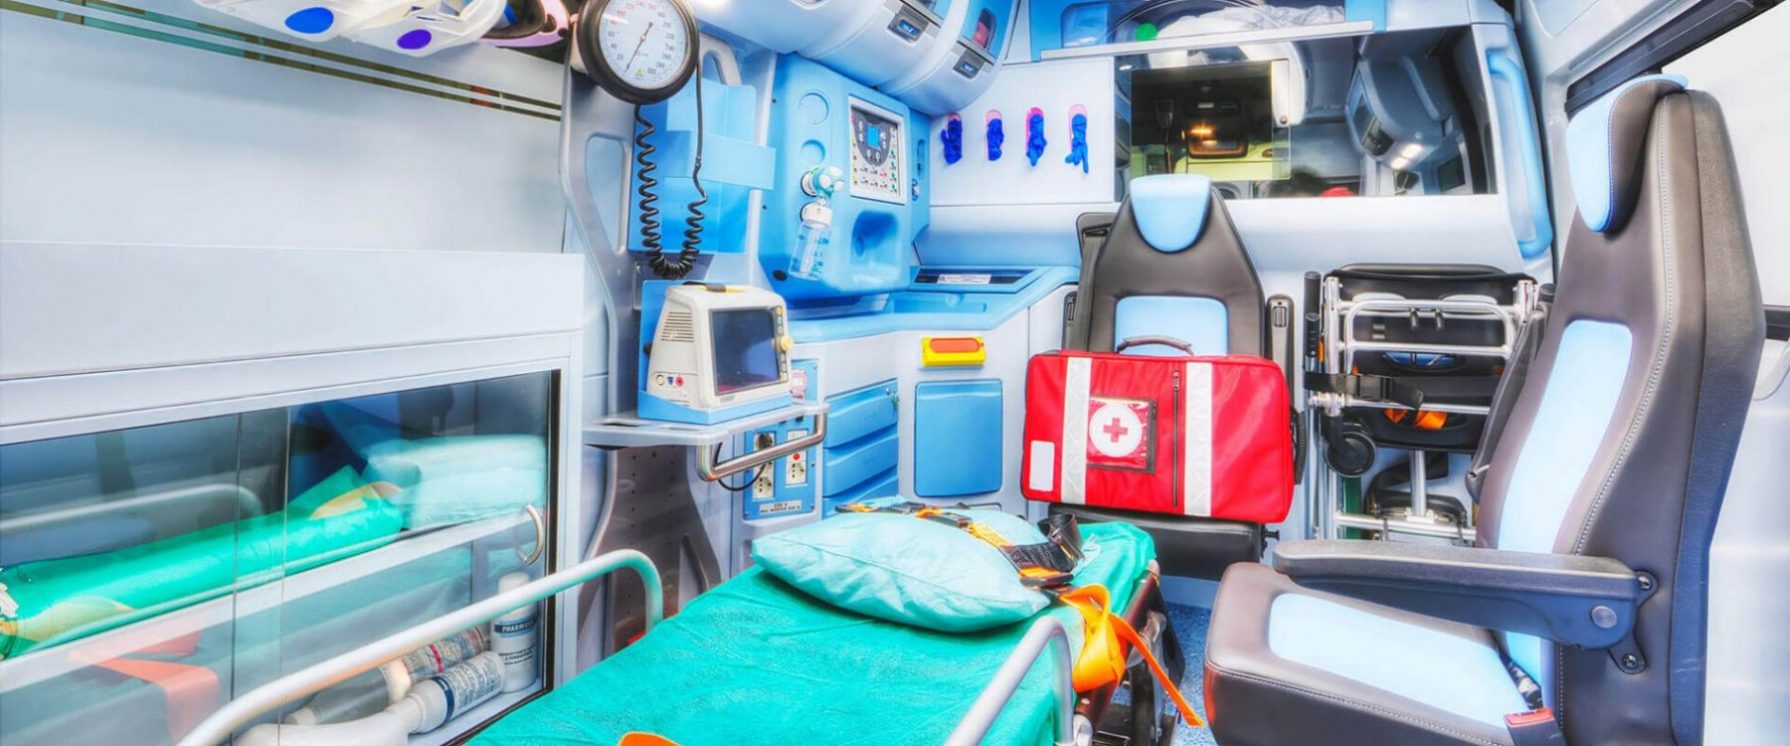 intérieur-ambulance - ambulance armillon-porrettta - demande de transport vsl - transport ambulance